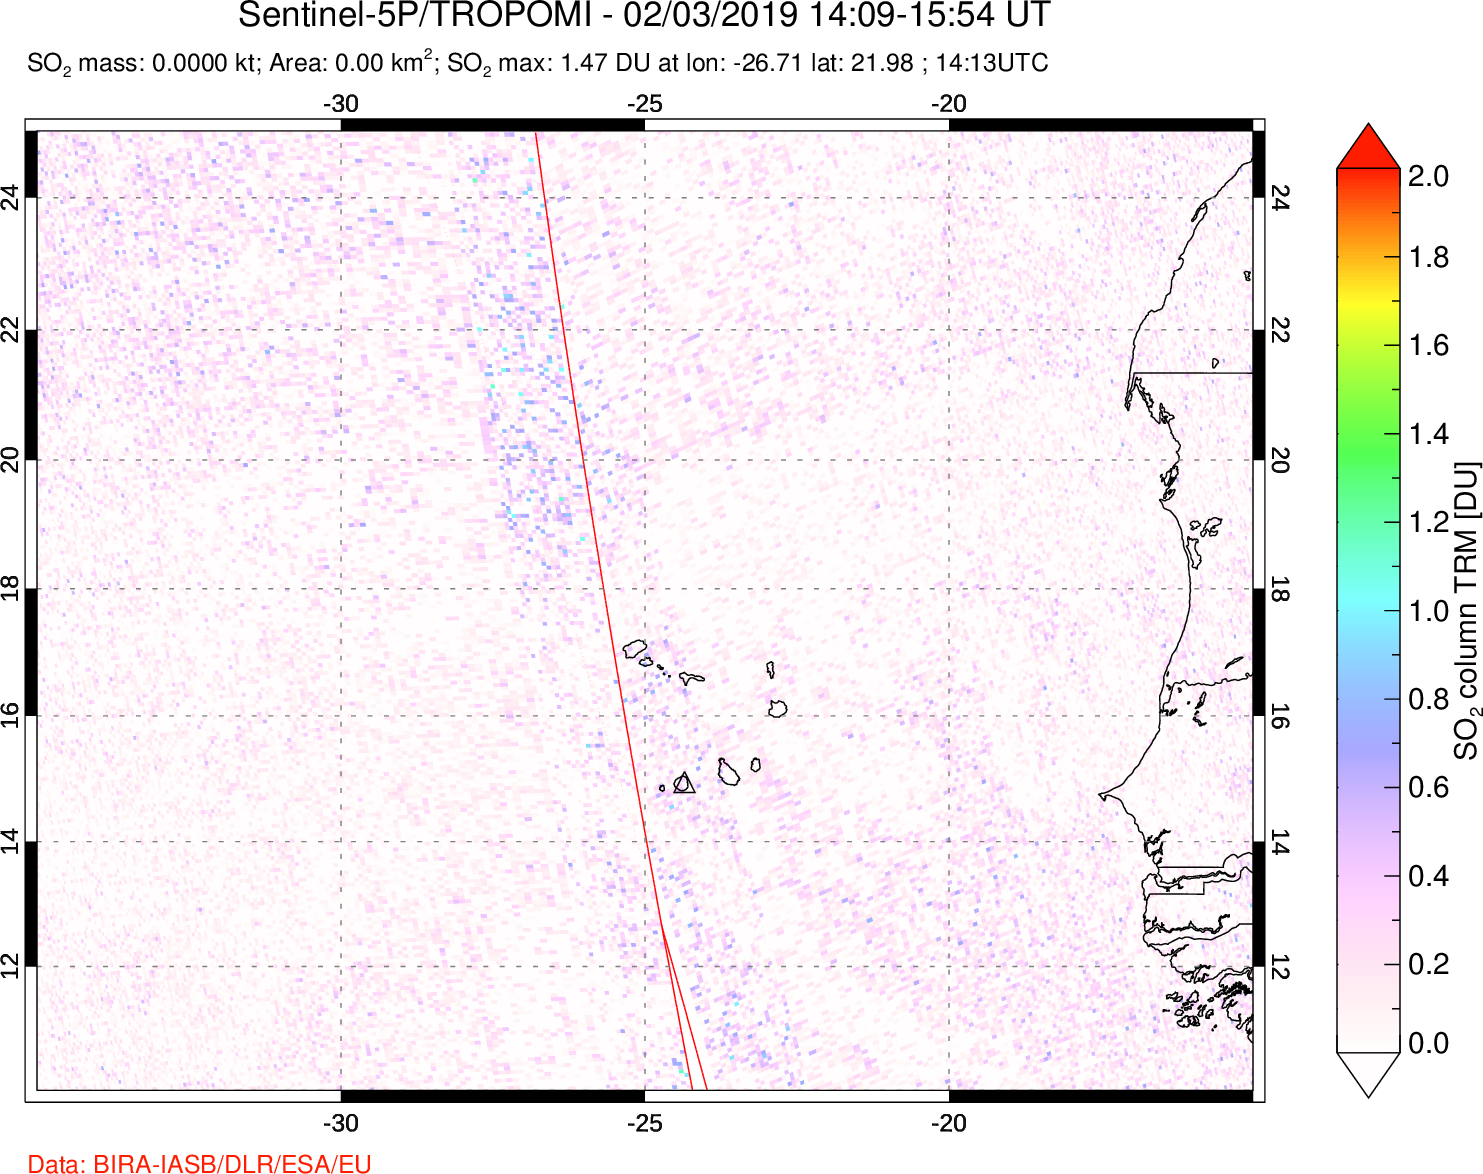 A sulfur dioxide image over Cape Verde Islands on Feb 03, 2019.